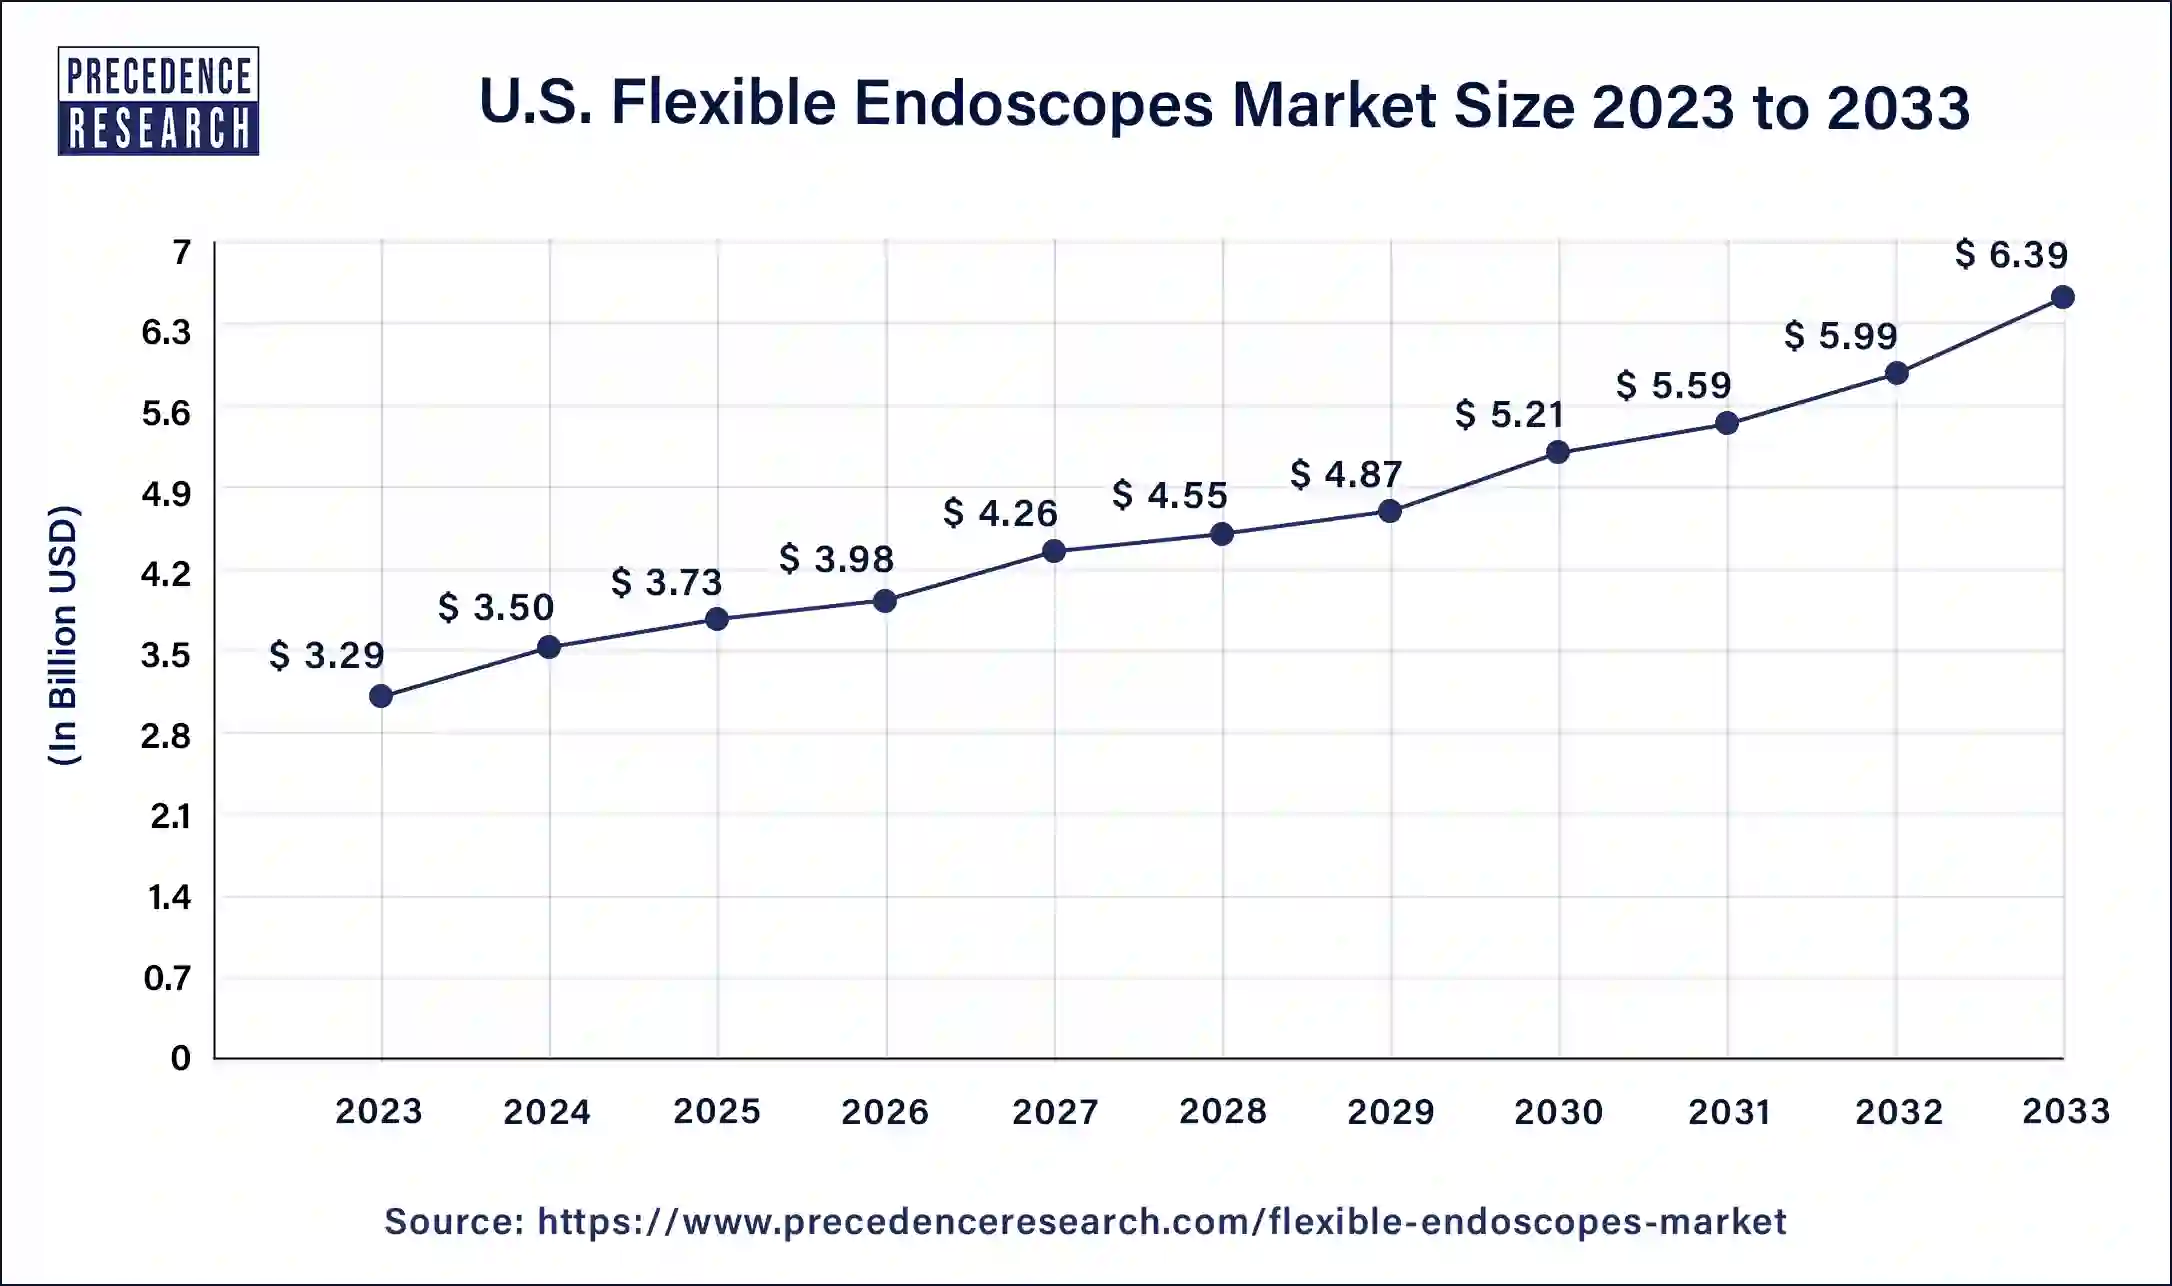 U.S. Flexible Endoscopes Market Size 2024 to 2033